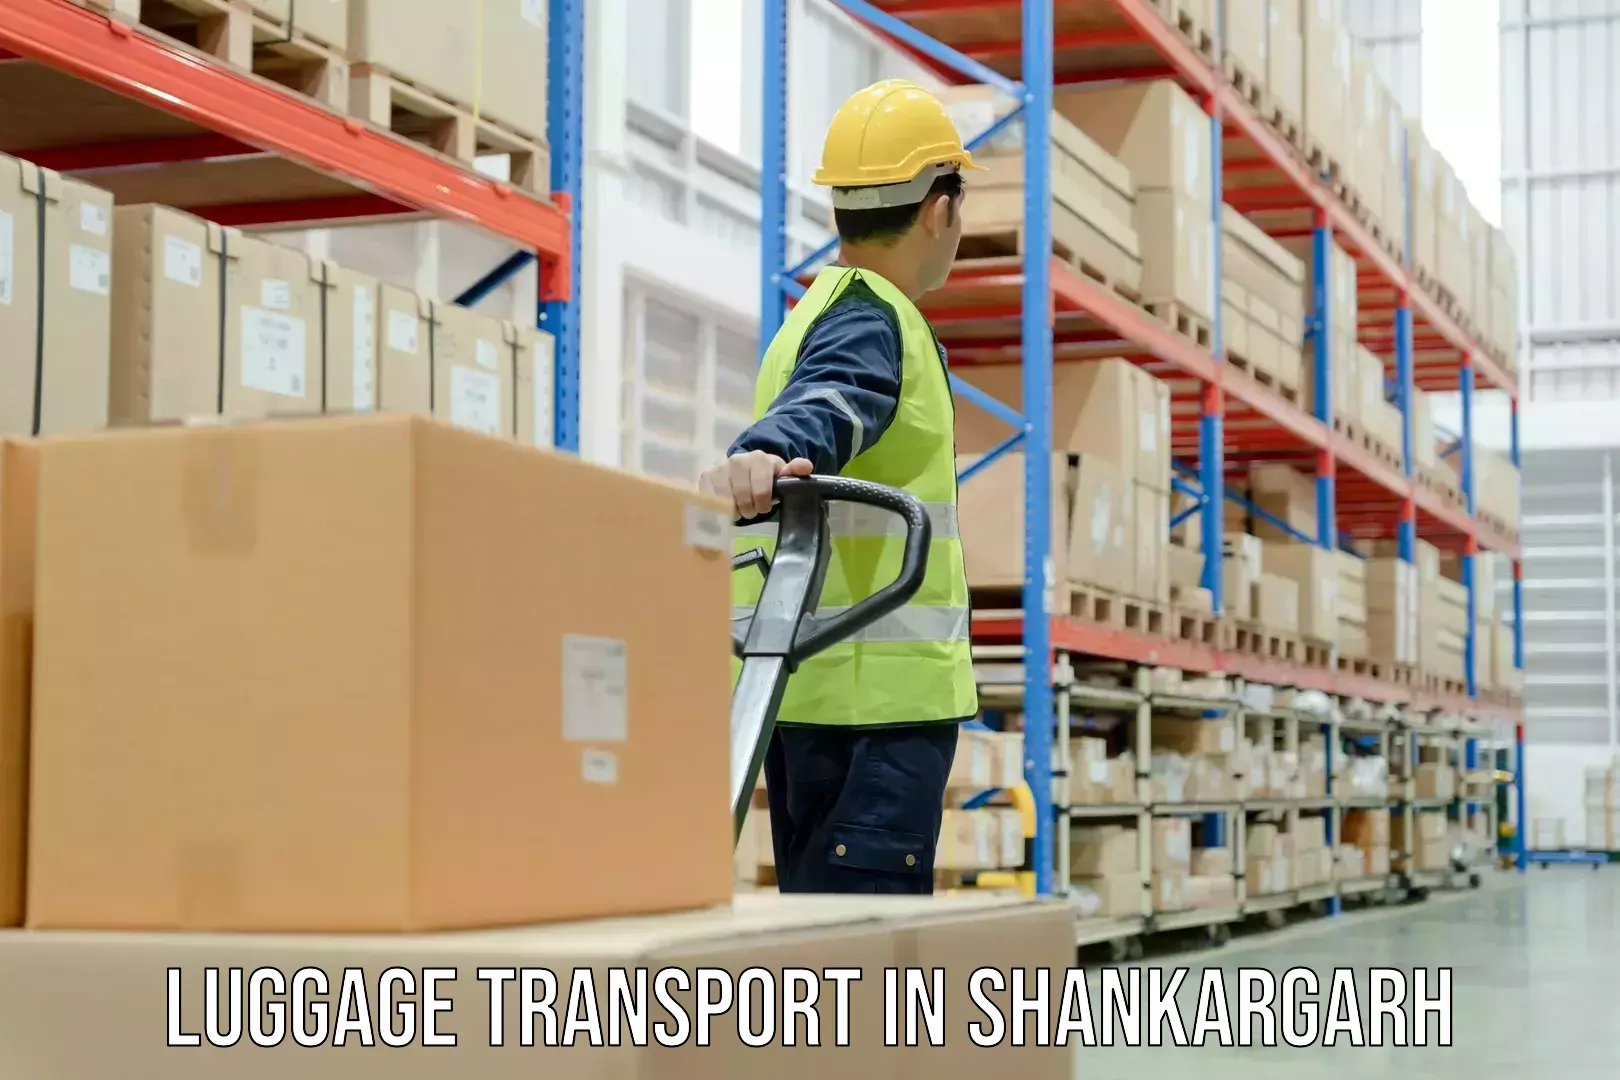 Luggage transport logistics in Shankargarh